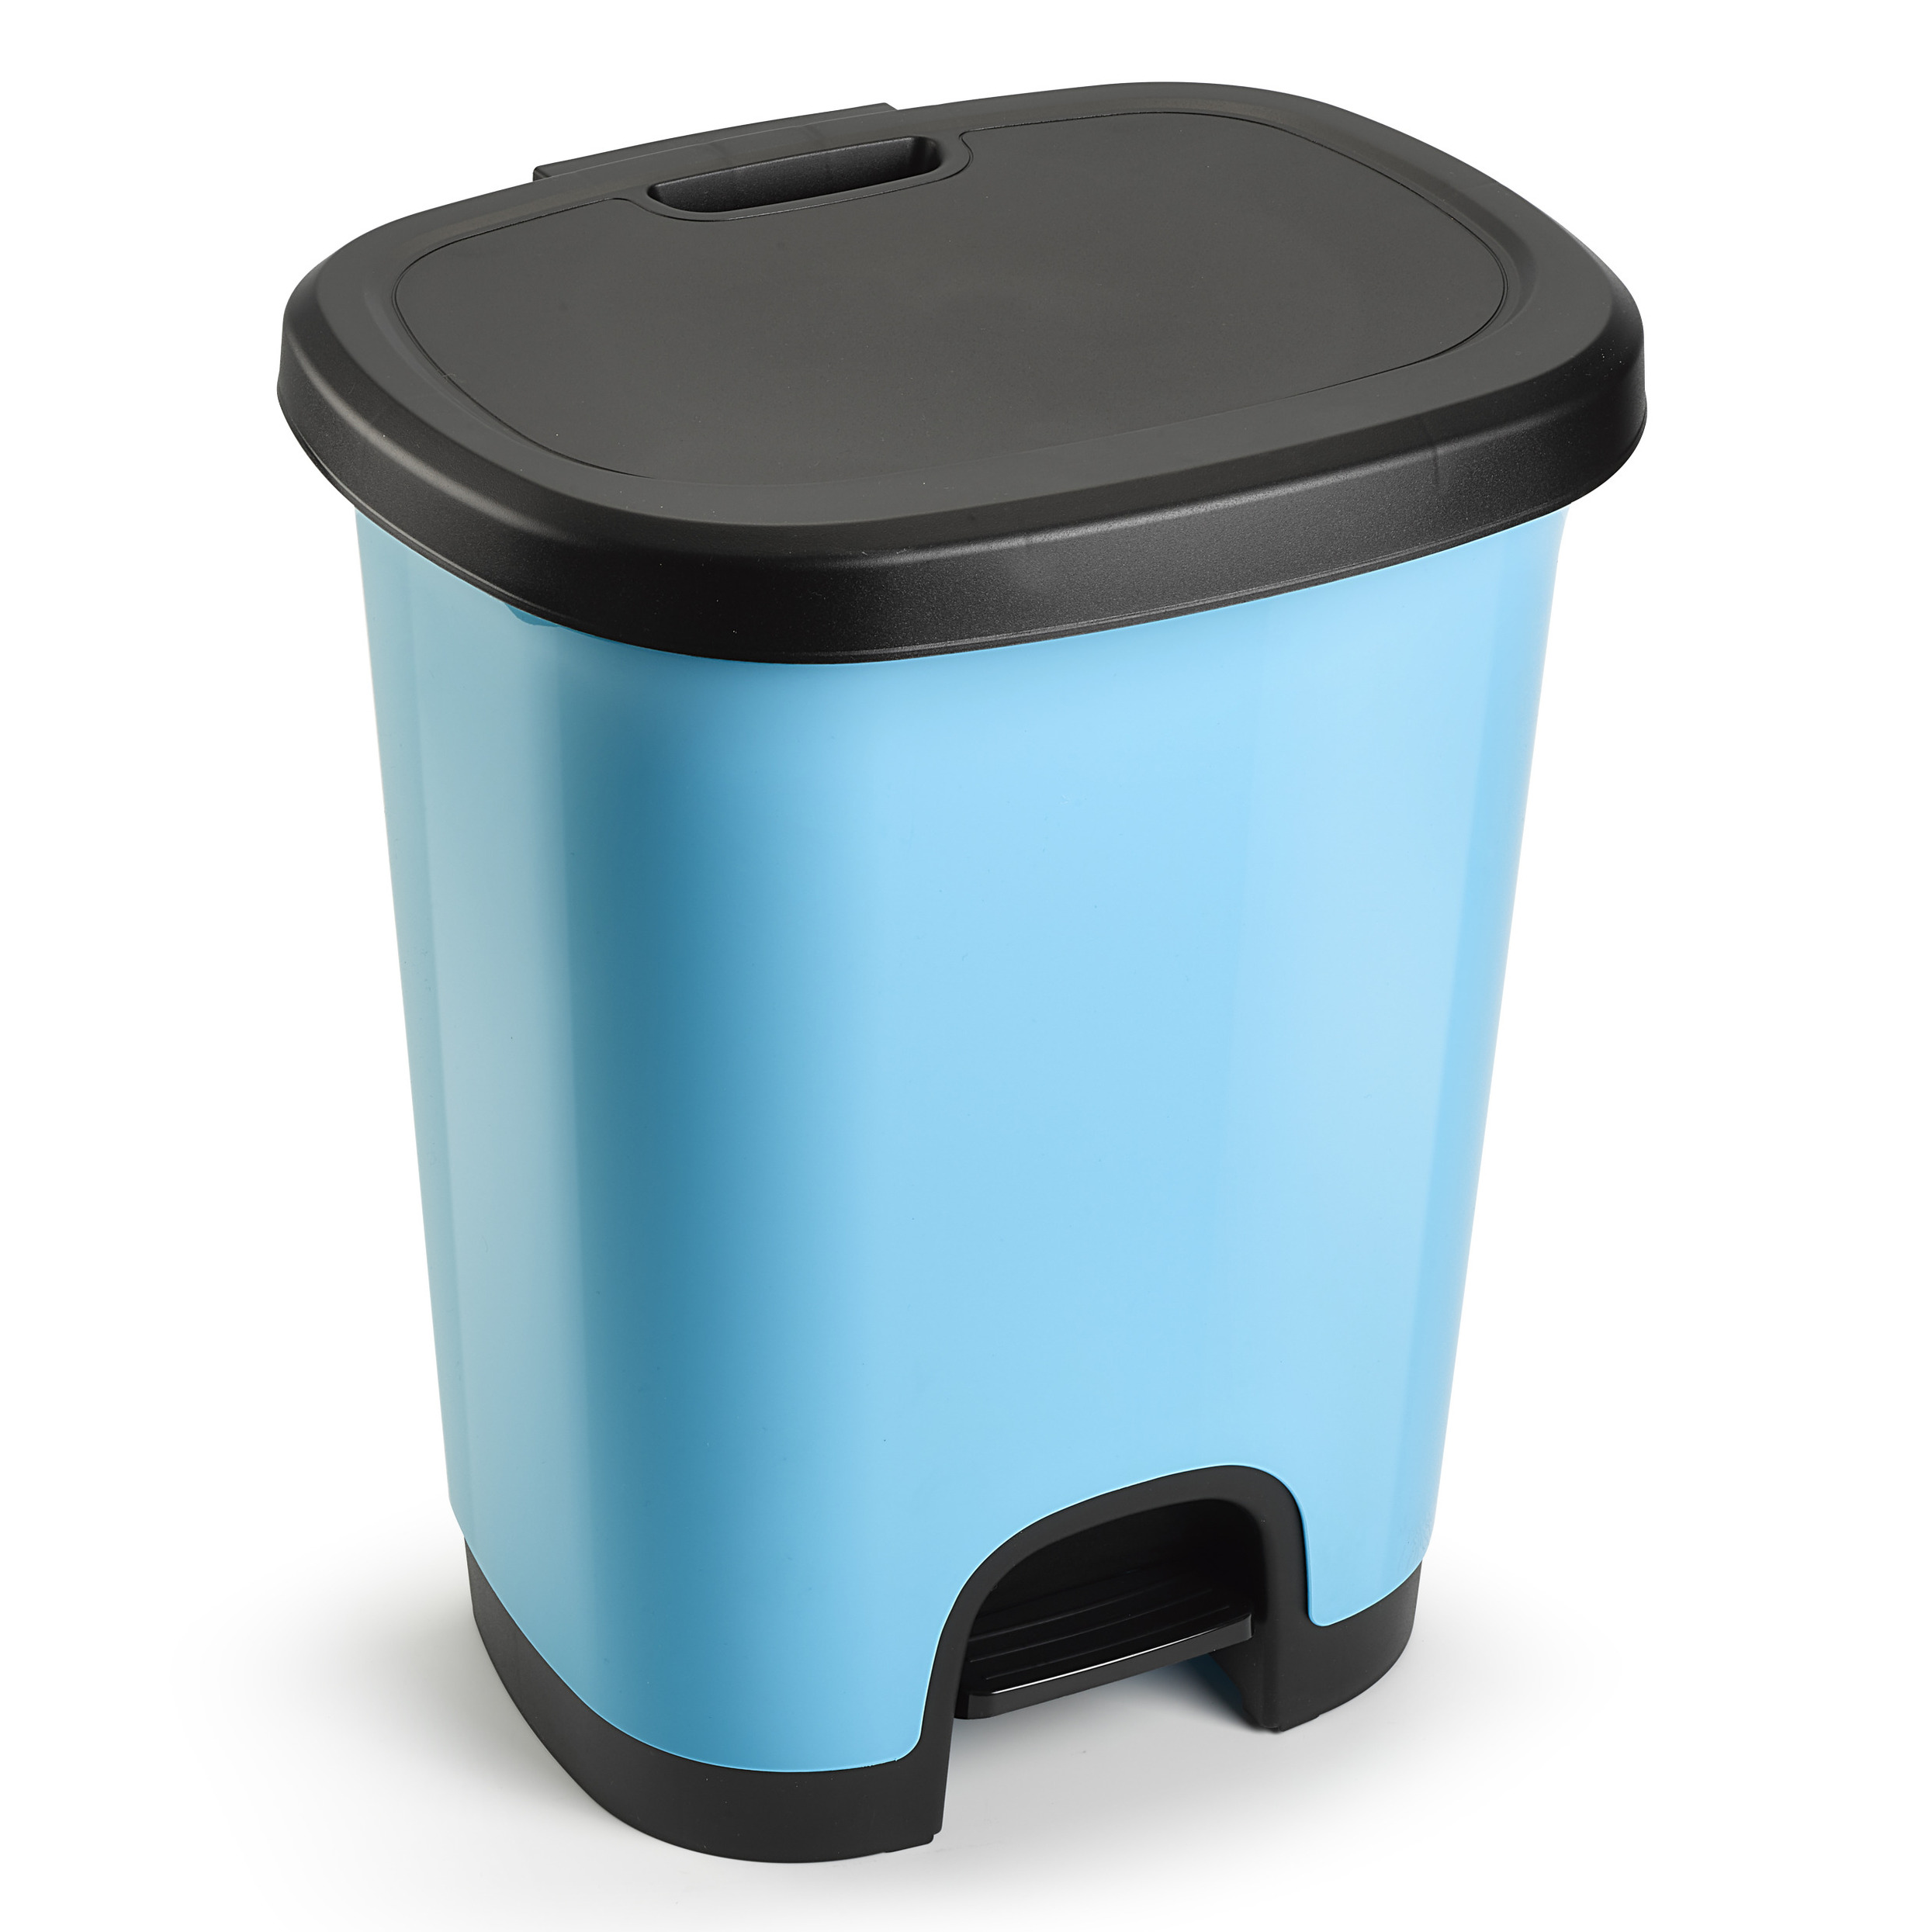 Afvalemmer-vuilnisemmer-pedaalemmer 18 liter in het lichtblauw-zwart met deksel en pedaal